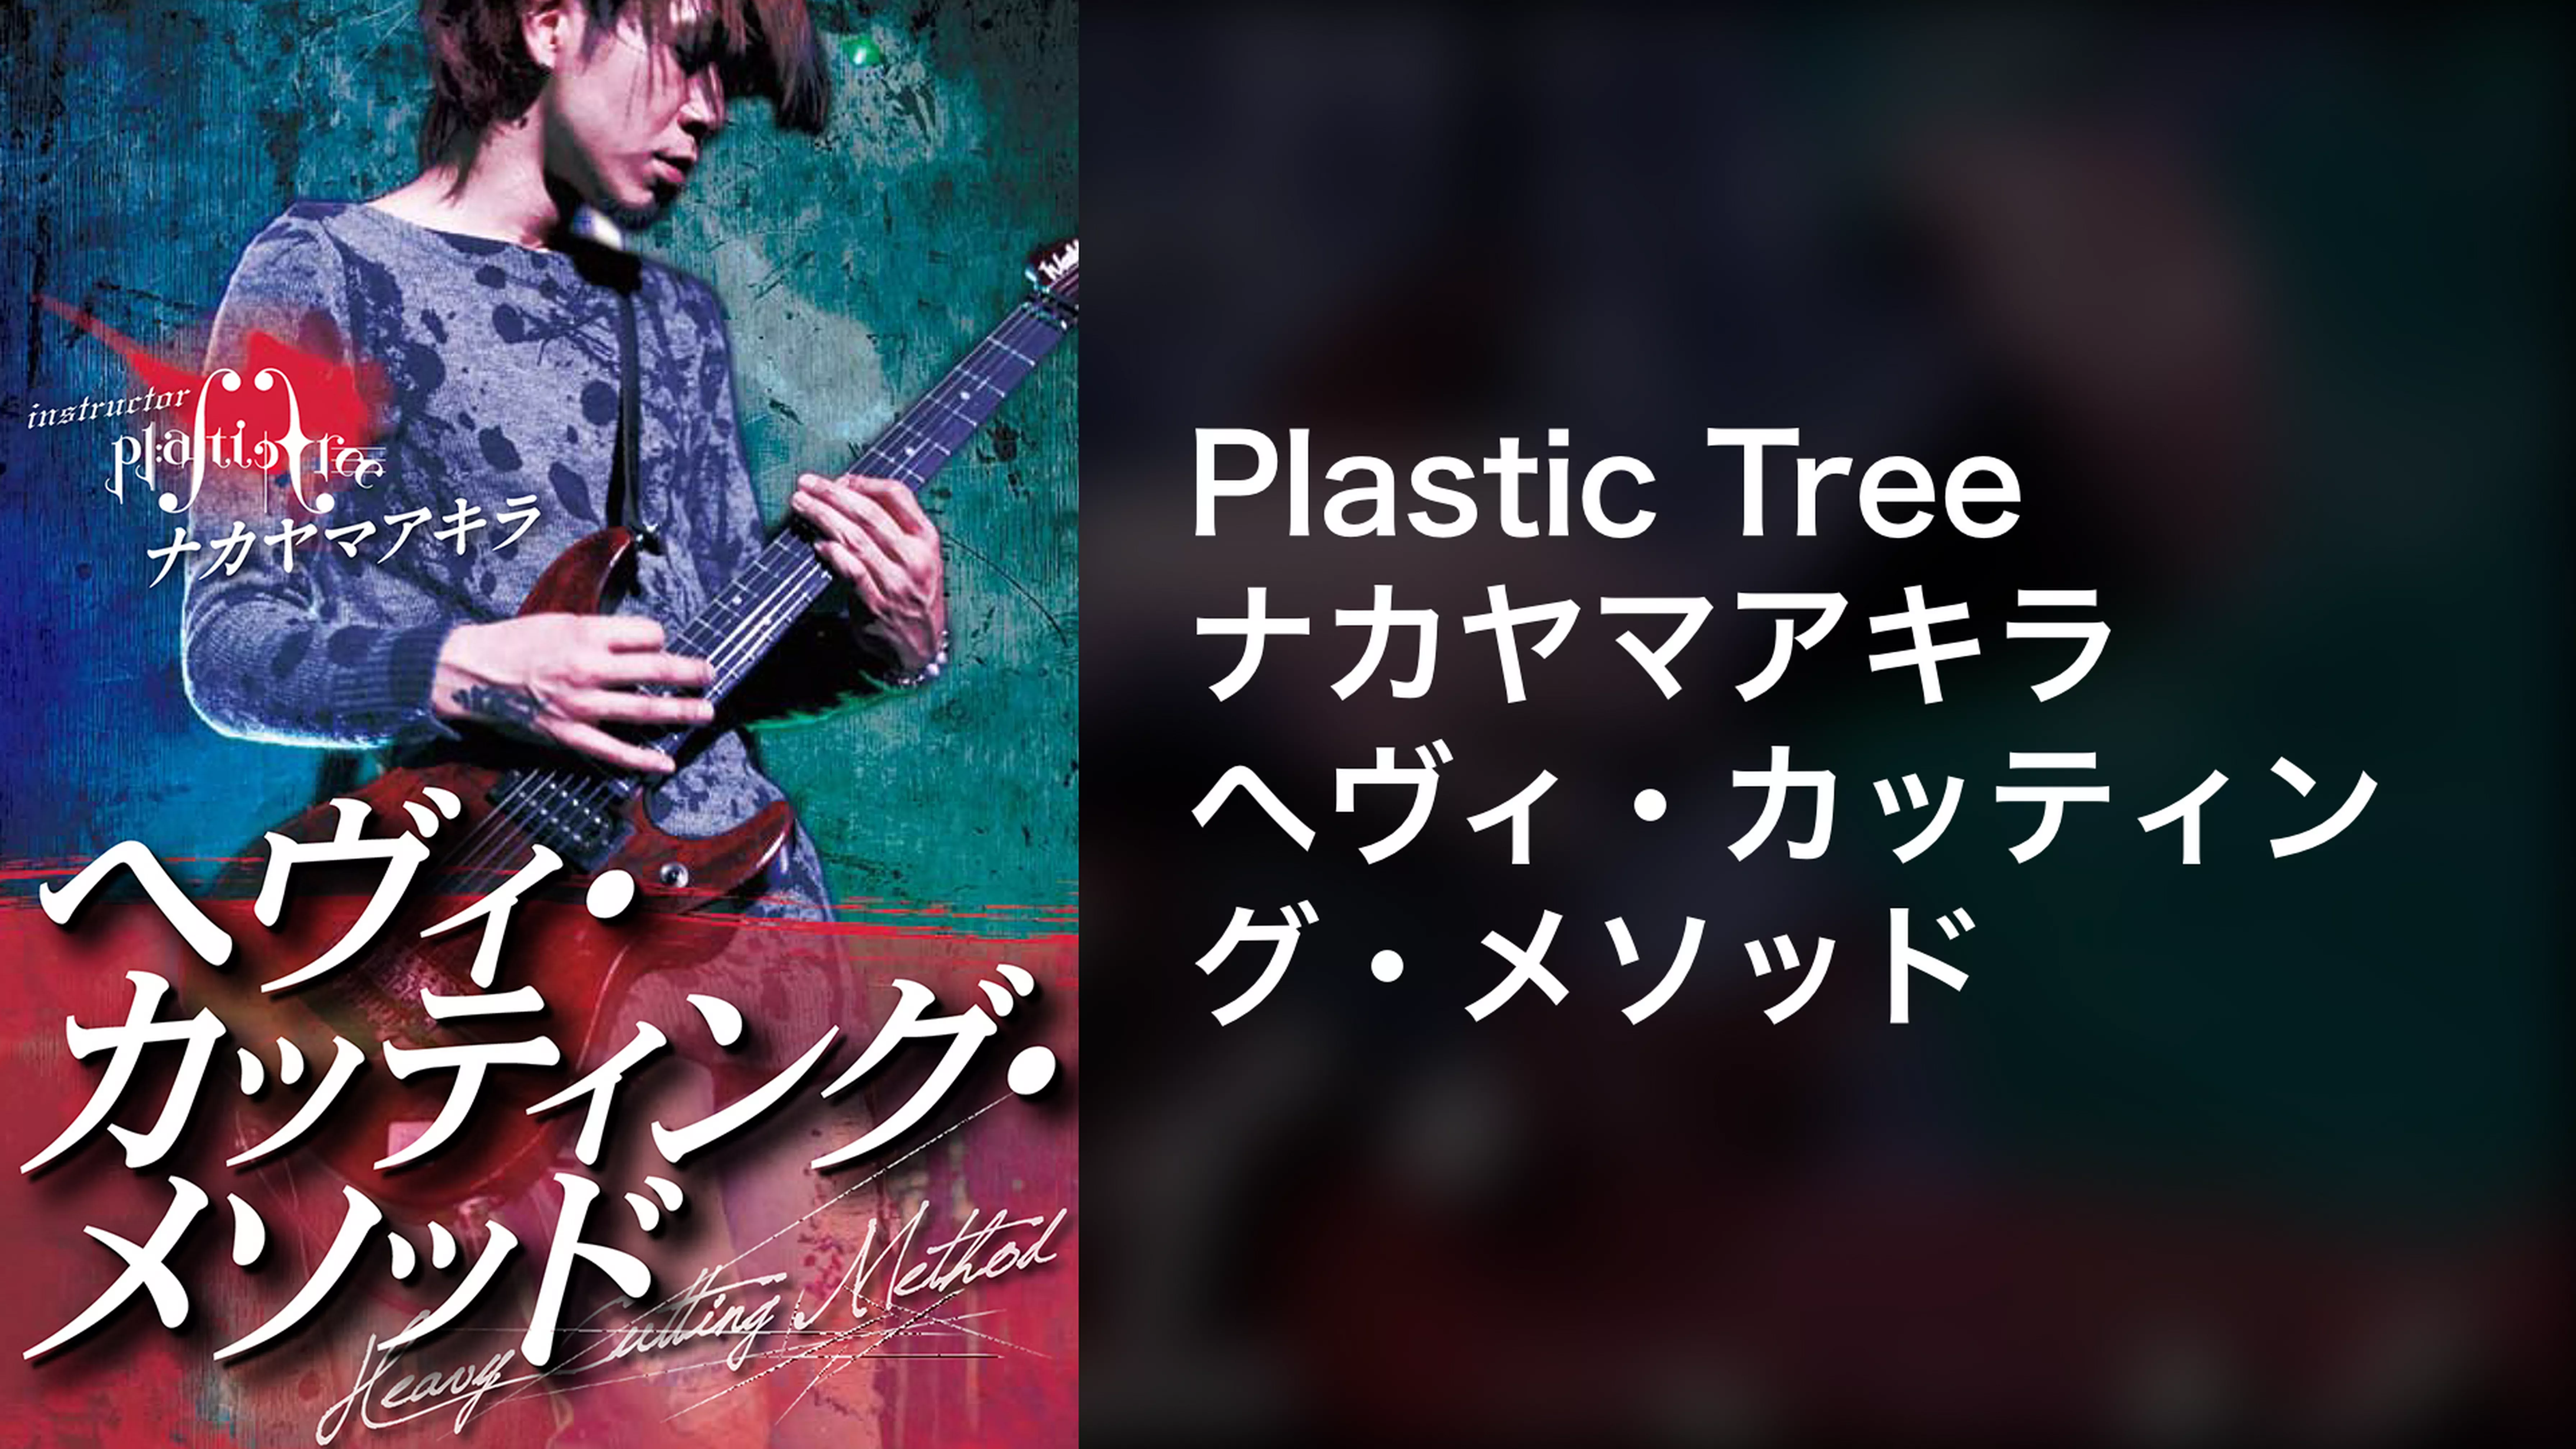 Plastic Tree ナカヤマアキラ へヴィ・カッティング・メソッド